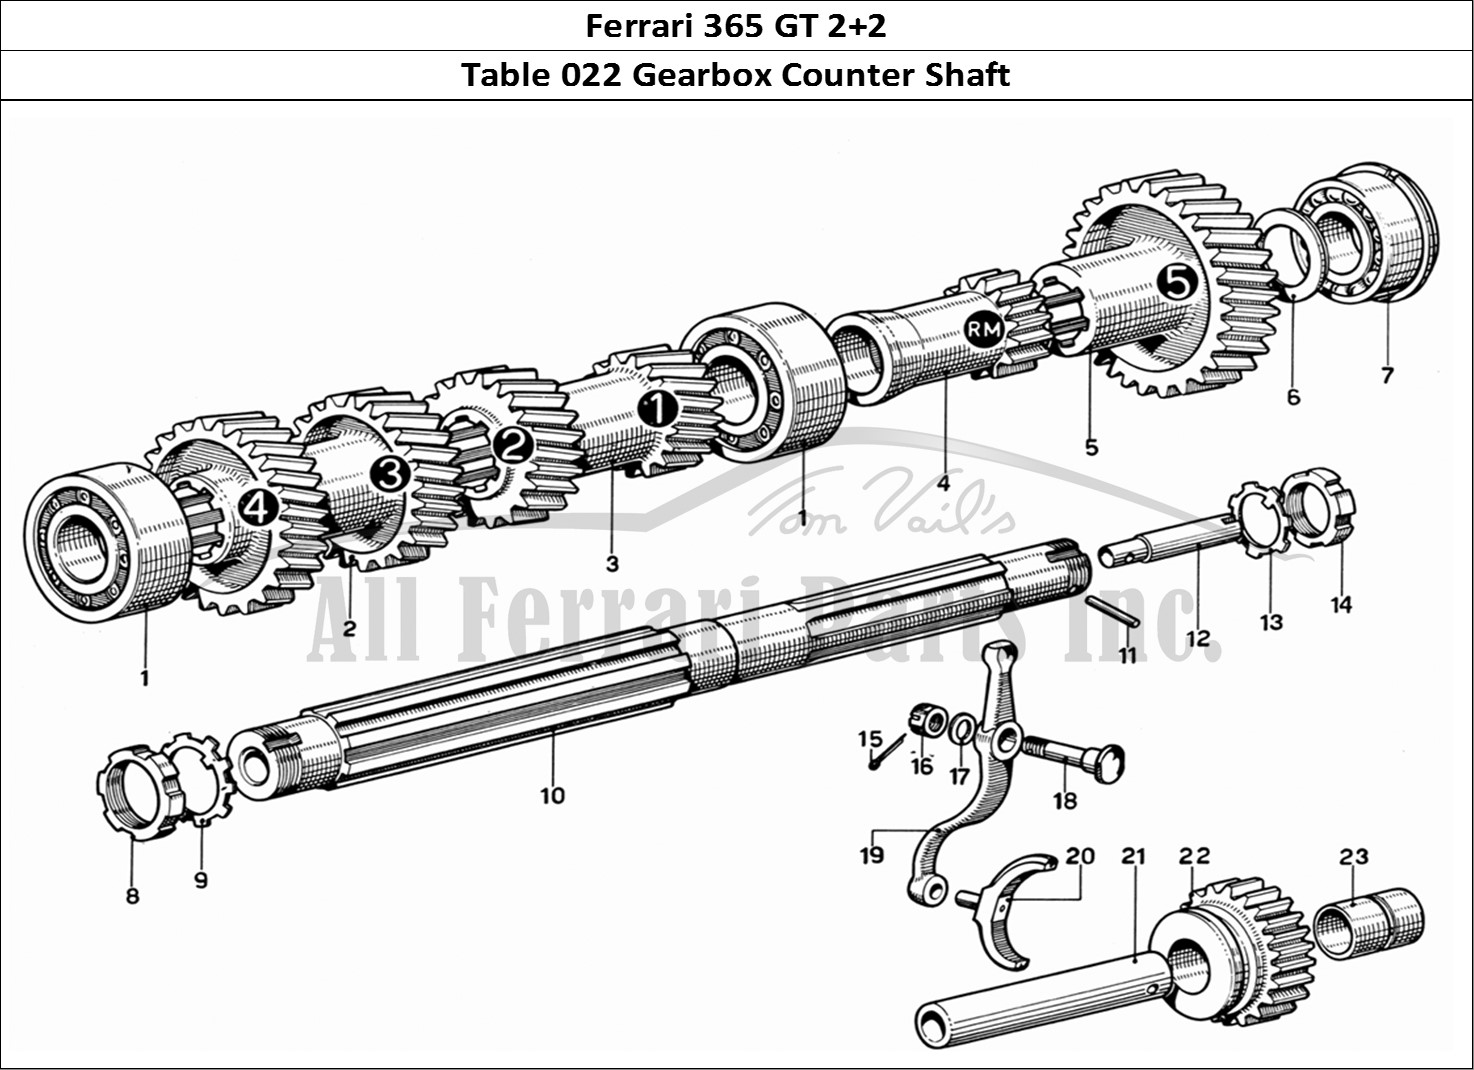 Ferrari Parts Ferrari 365 GT 2+2 (Mechanical) Page 022 Countershaft